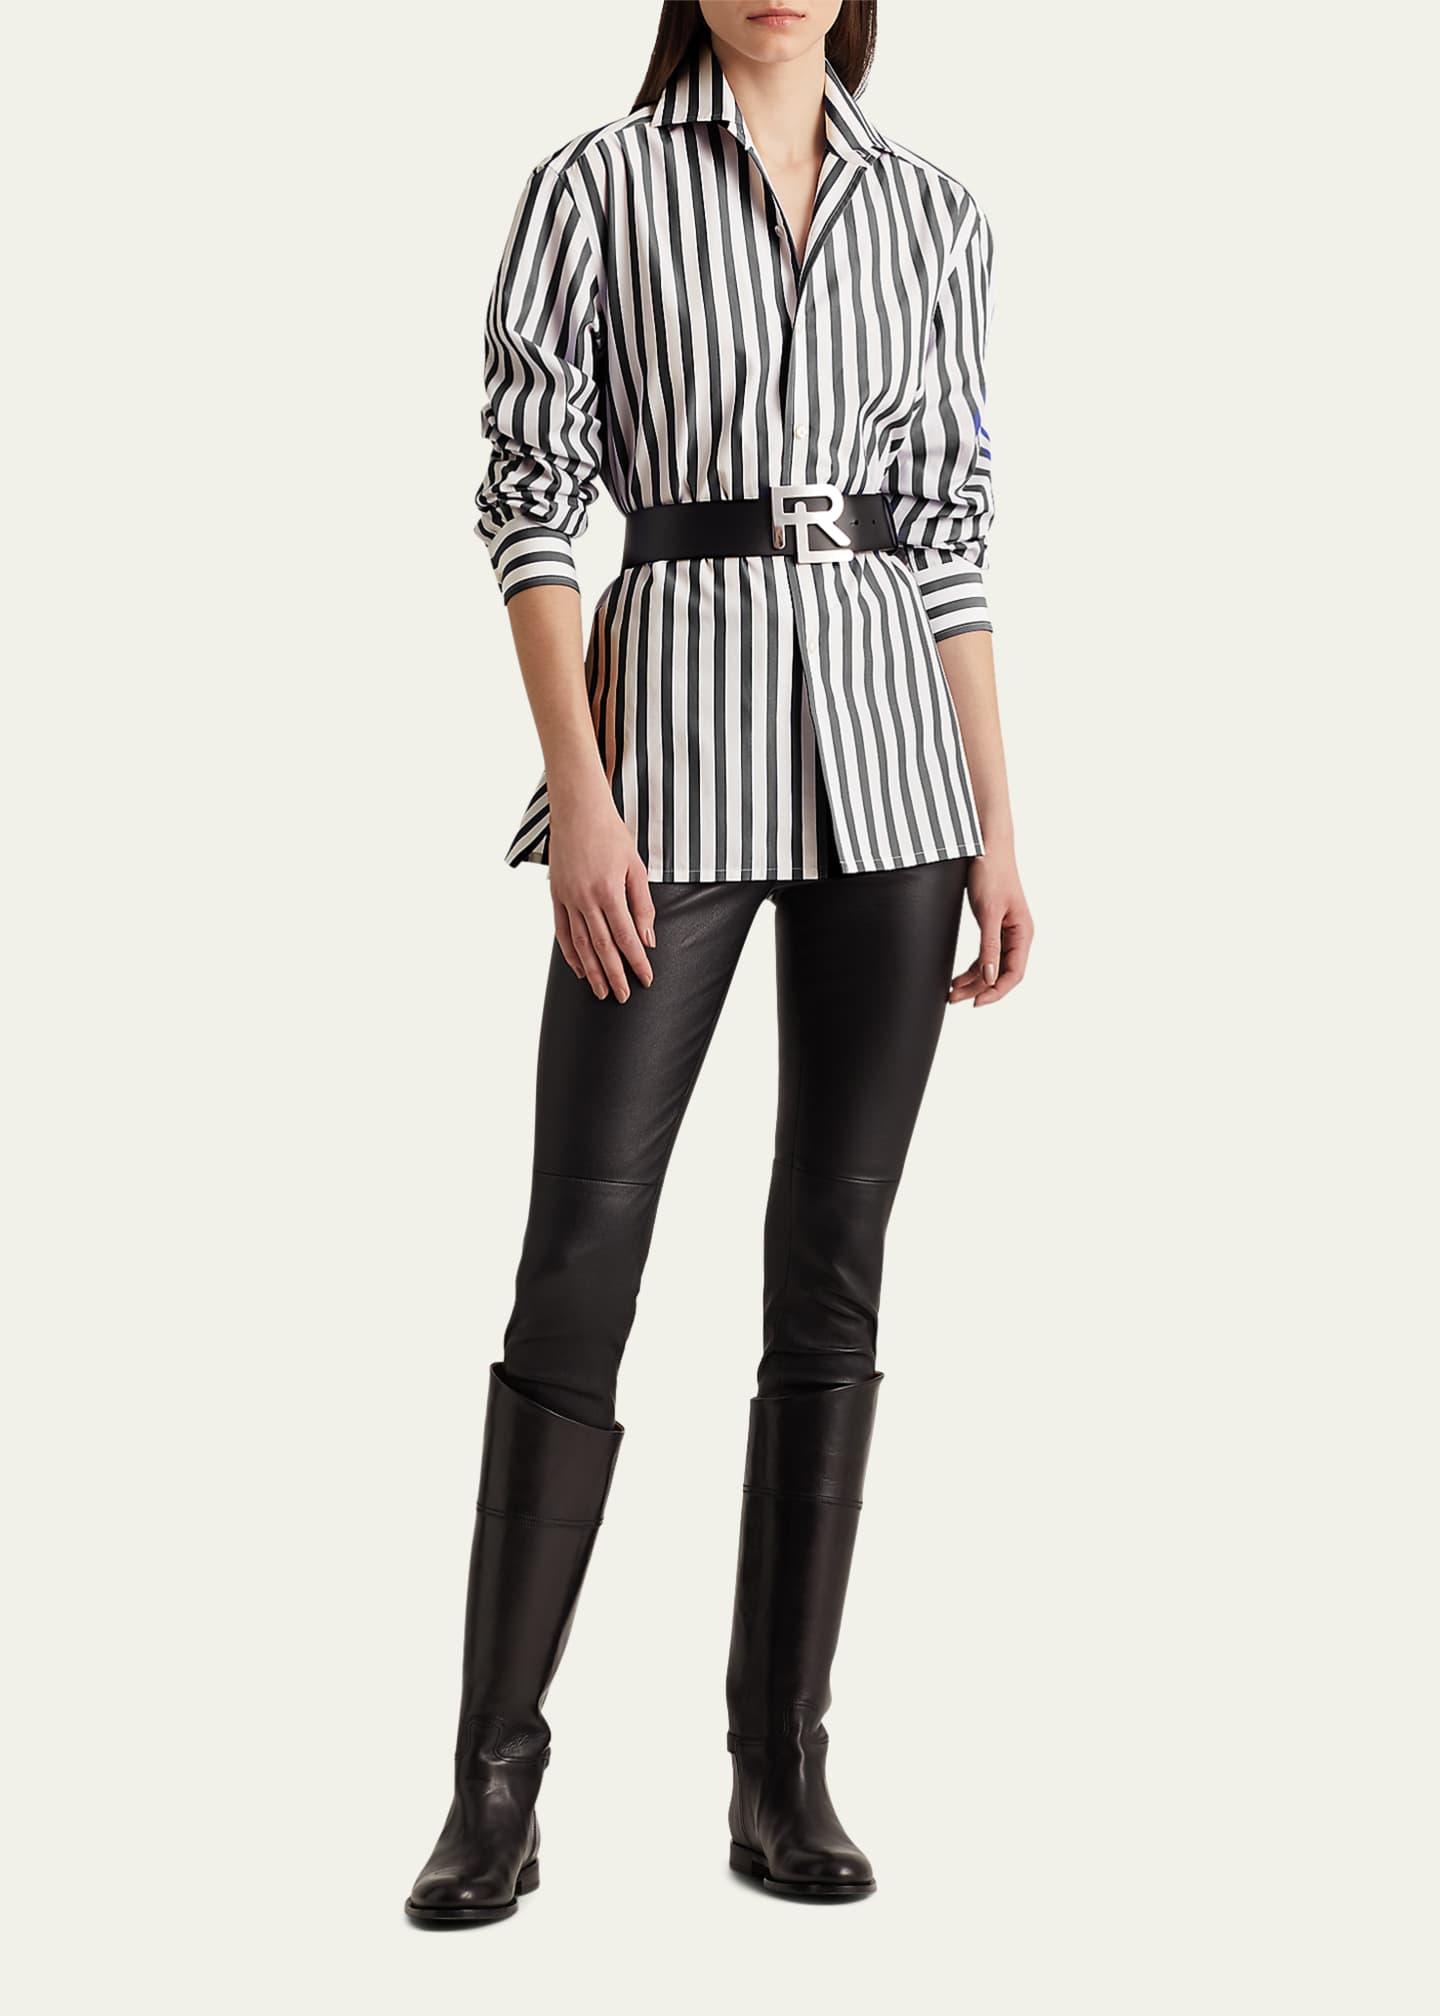 Ralph Lauren Collection Women's Capri Striped Cotton Shirt - Black White - Size 10